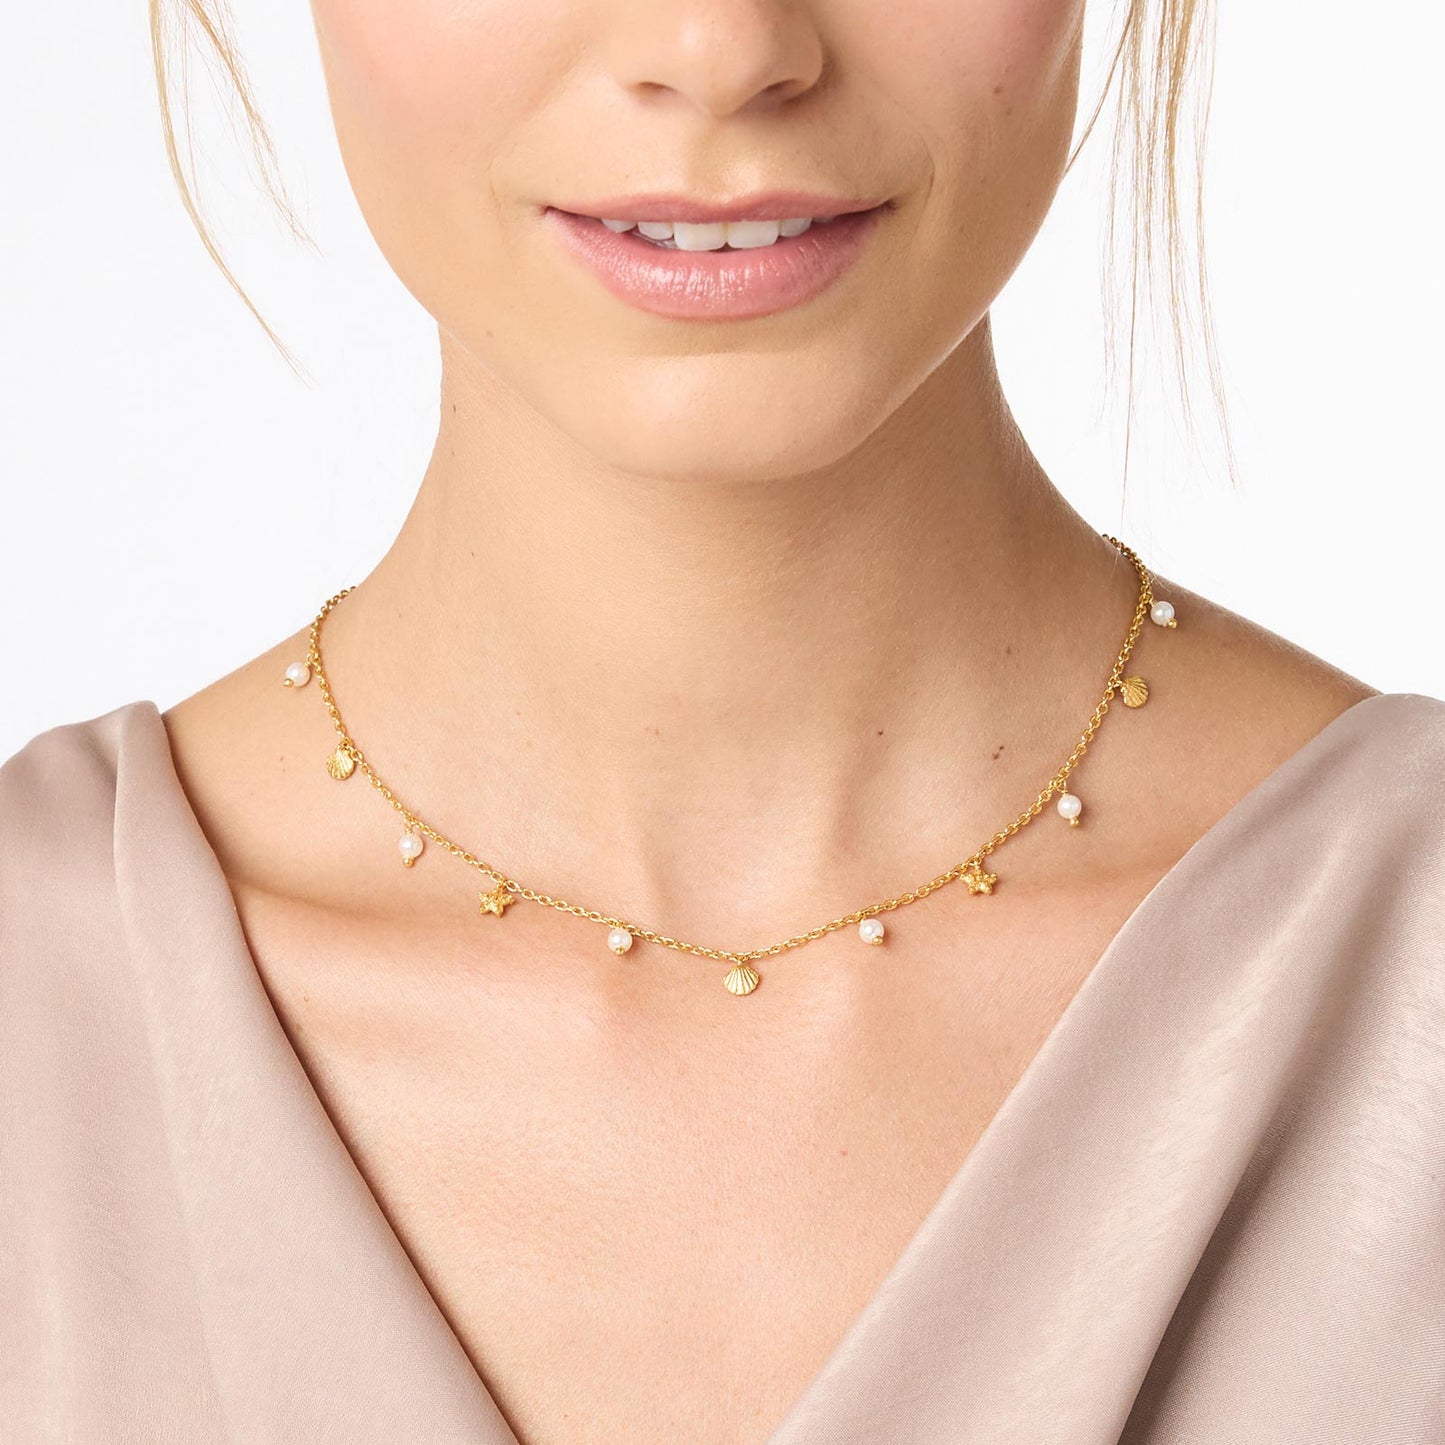 Sanibel Delicate Charm Necklace - Pearl